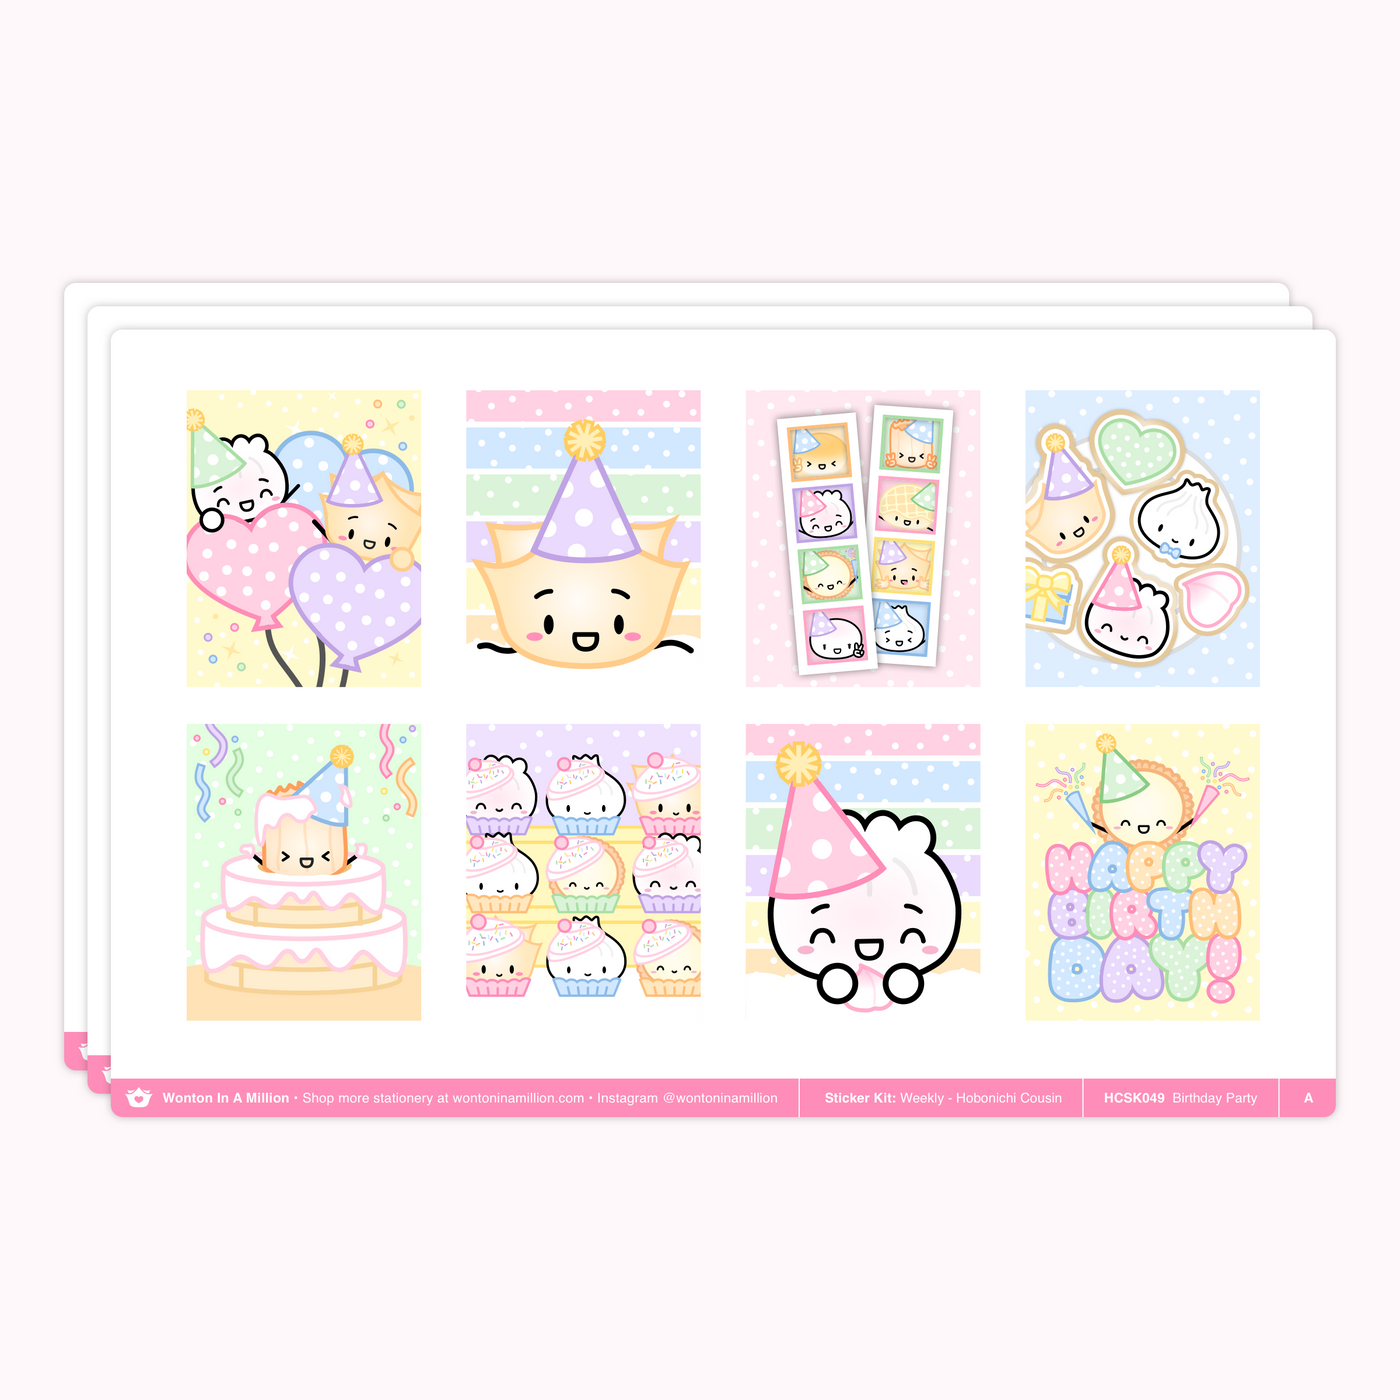 HCSK049 | Birthday Party Weekly Sticker Kit (Hobonichi Cousin)